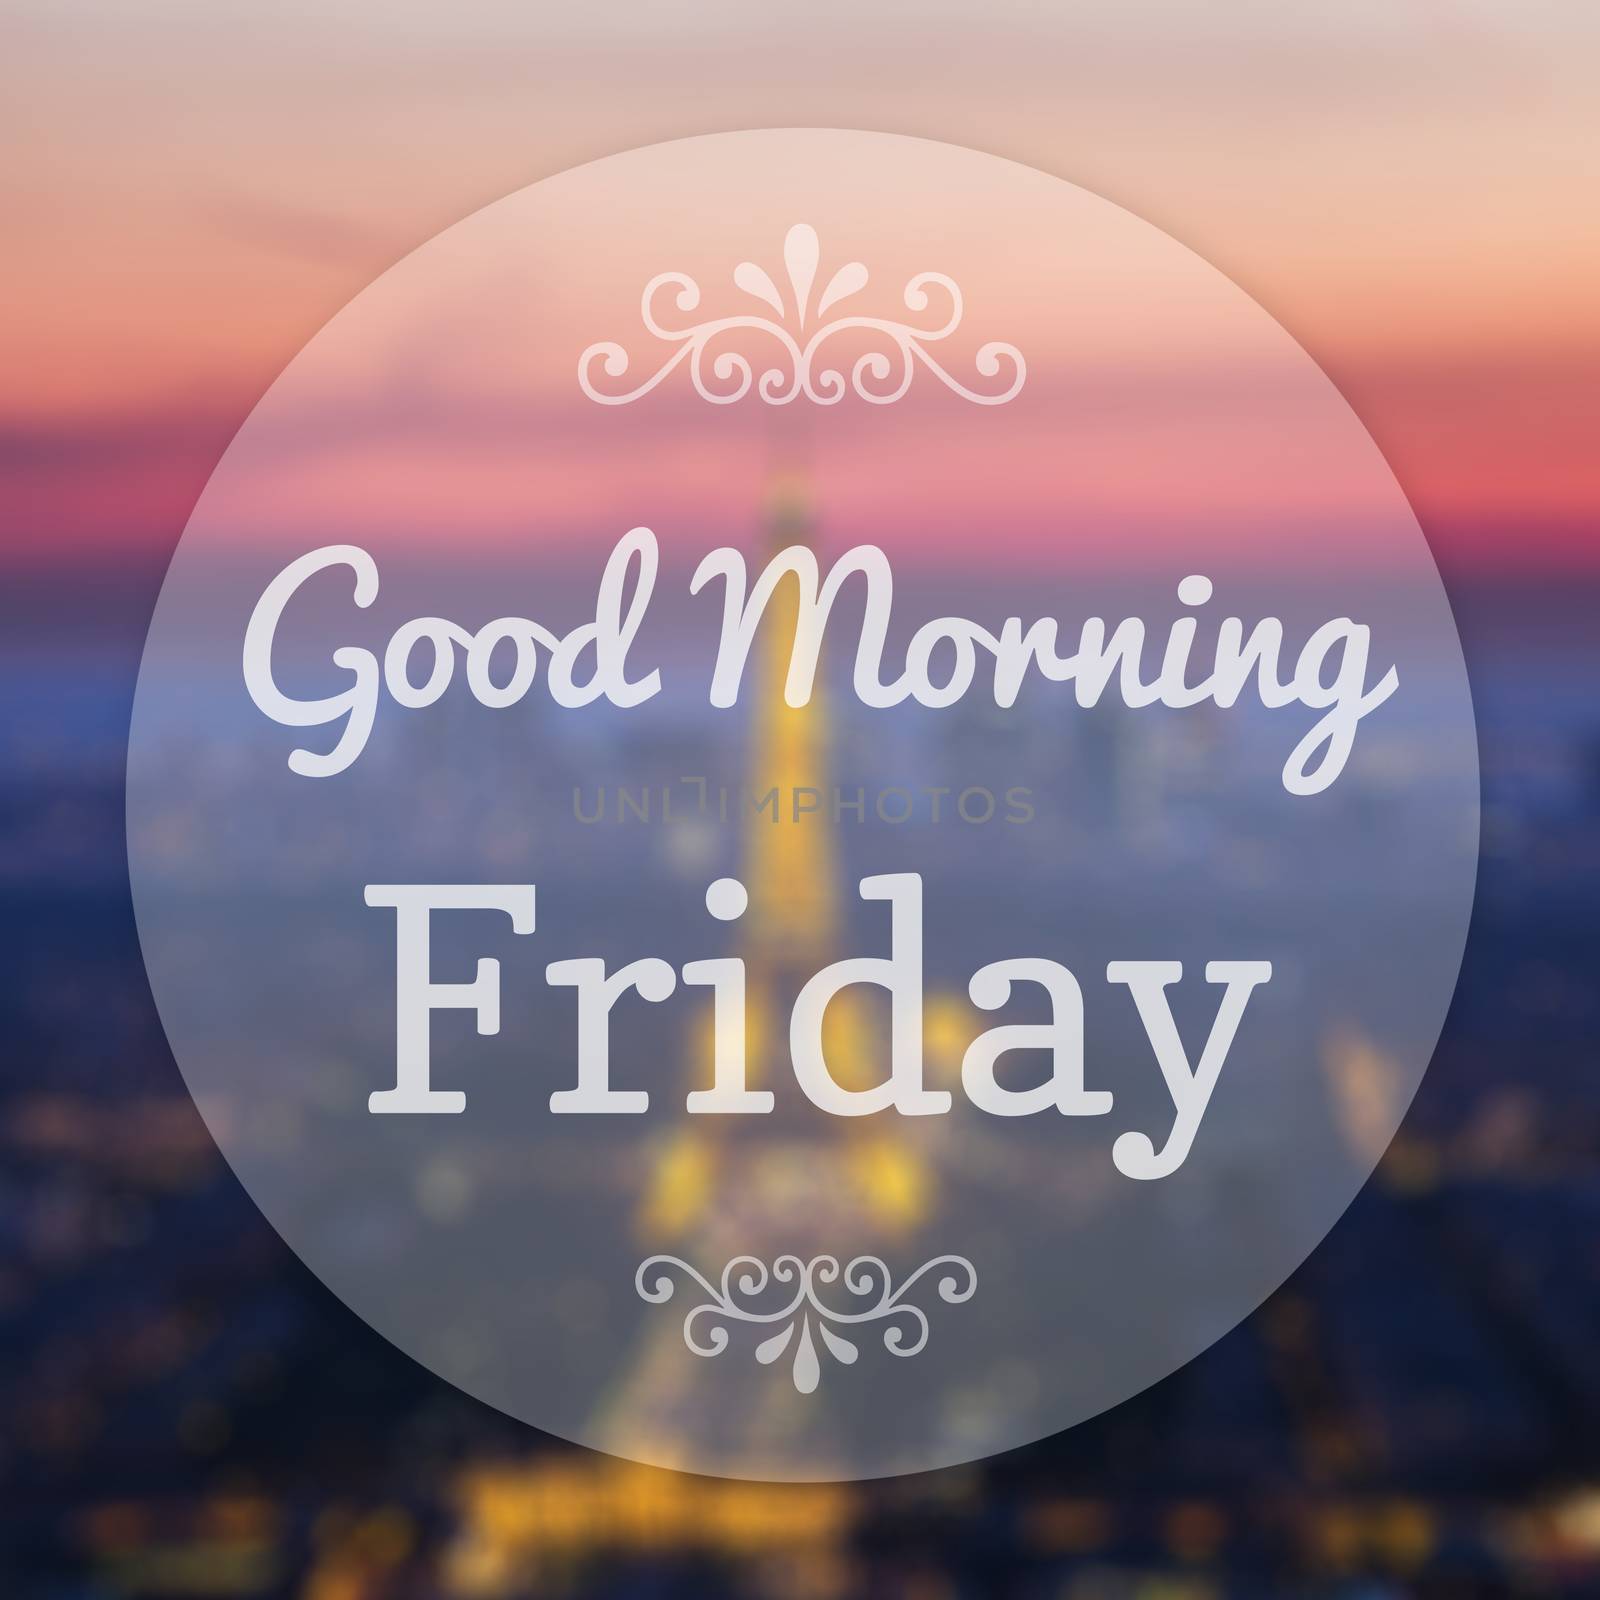 Good Morning Friday on Eiffle Paris blur background by 2nix